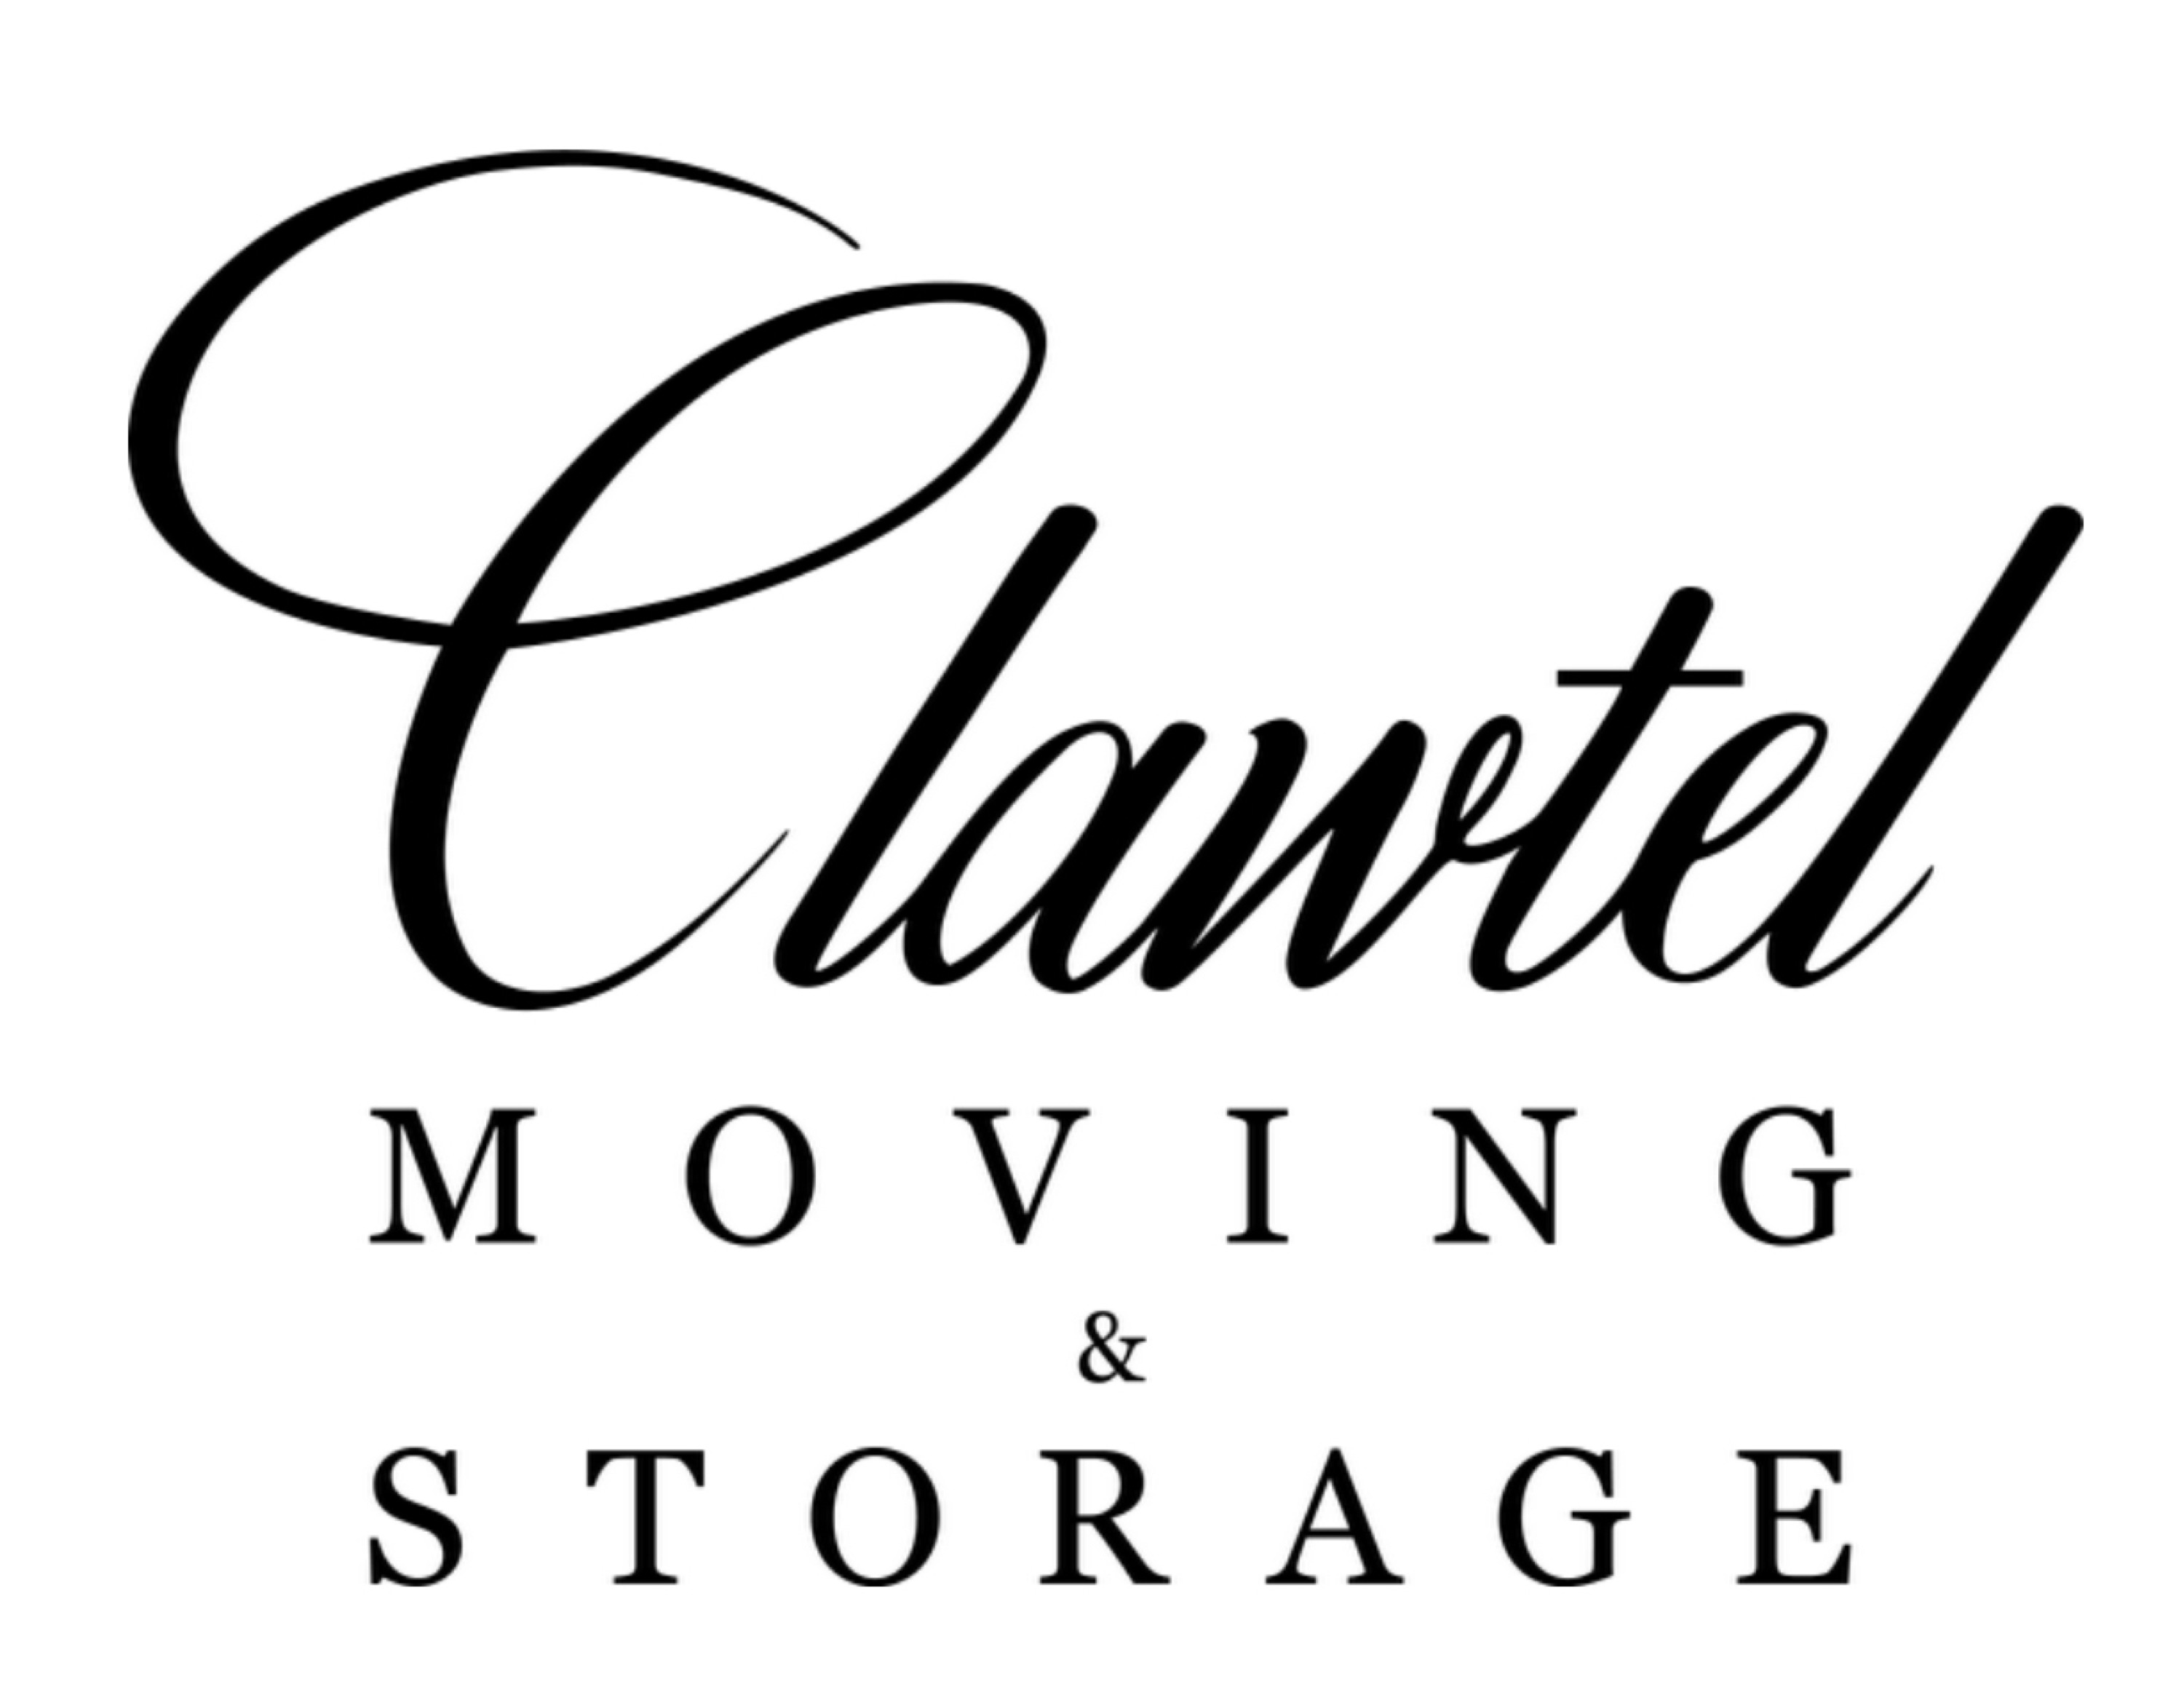 Clawtel Moving Logo